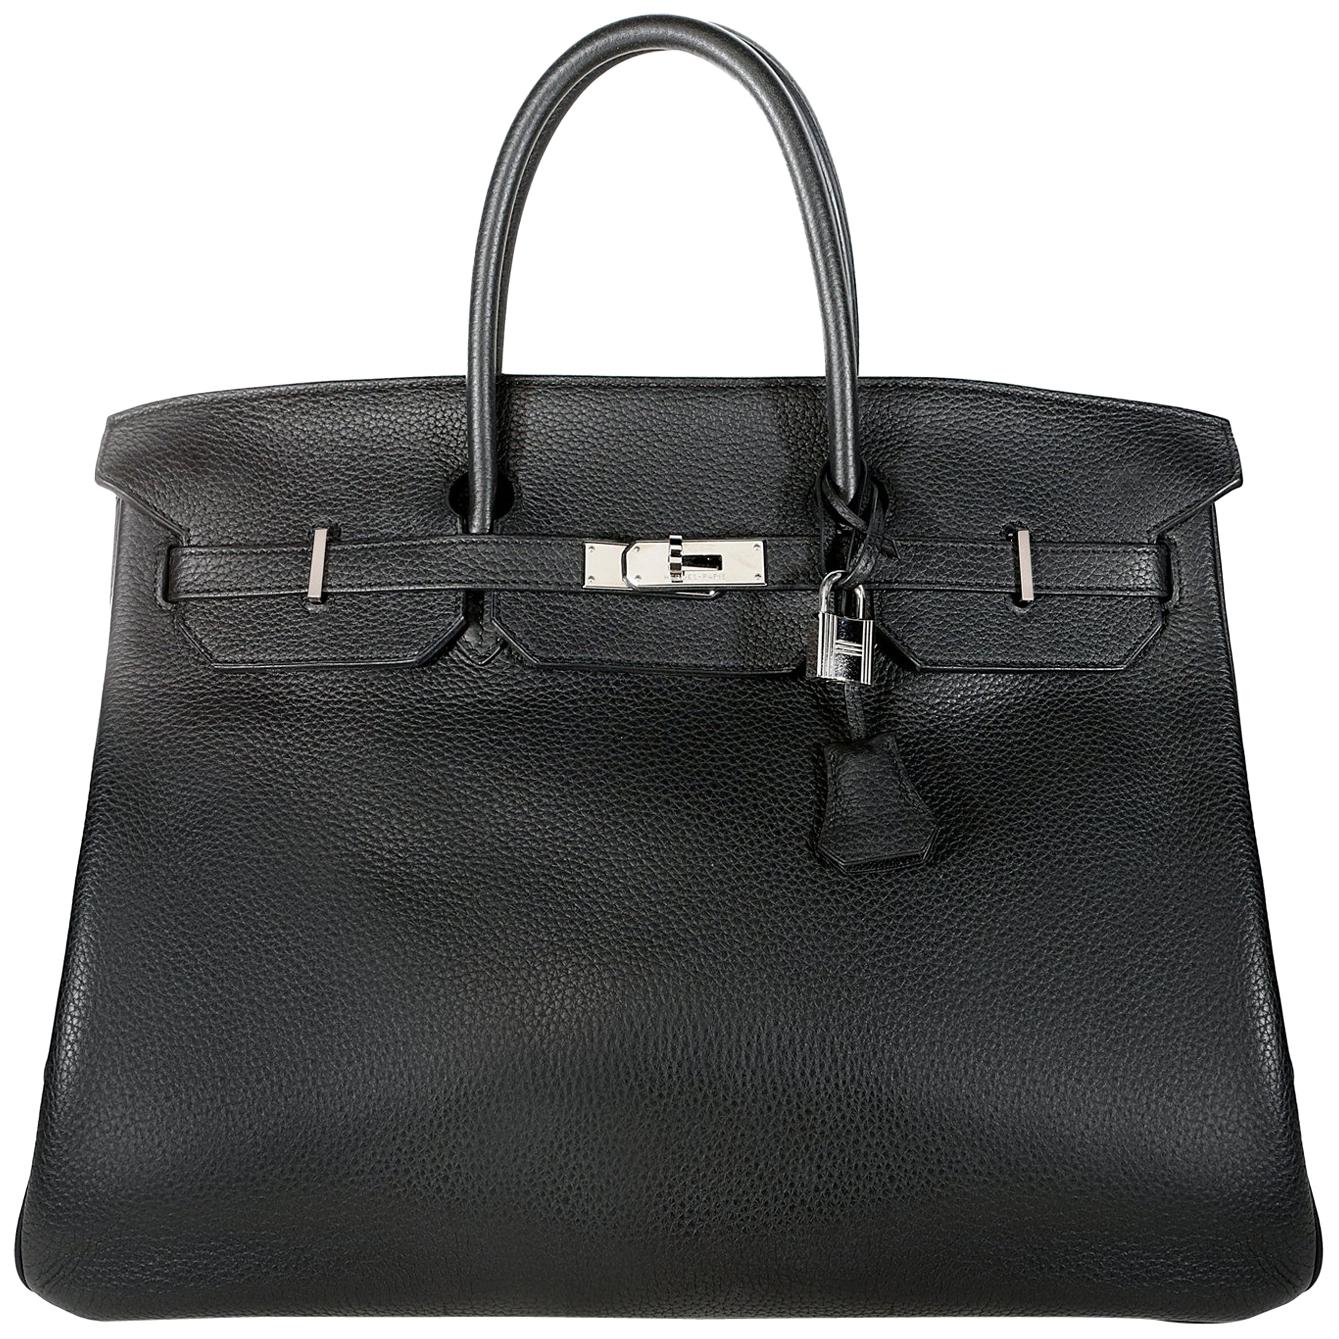 Hermès Black Noir Togo 40 cm Birkin Bag